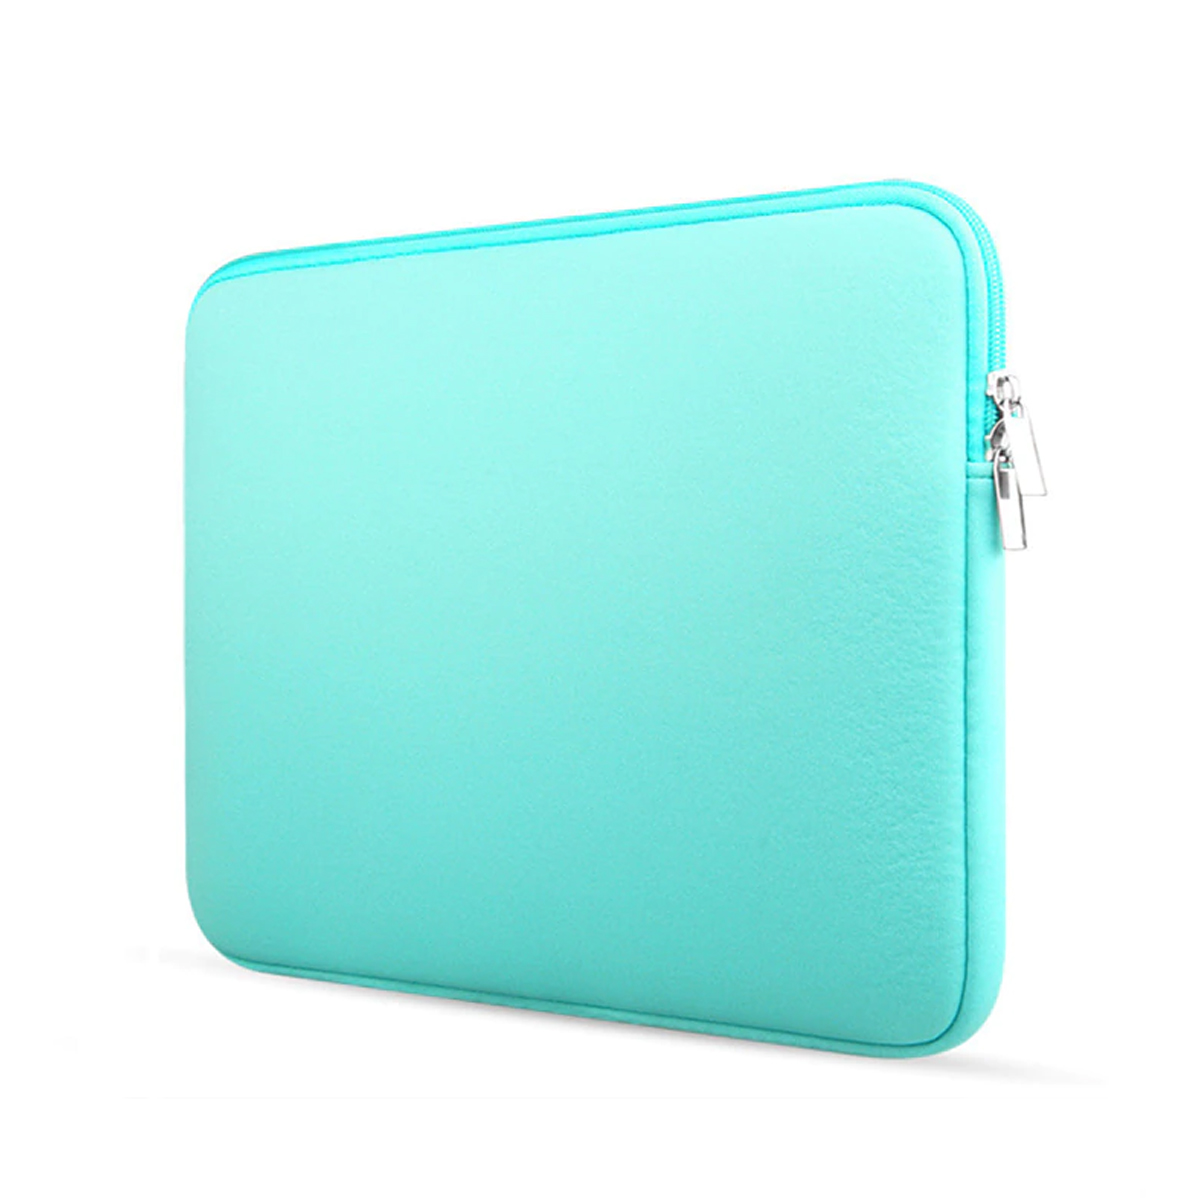 Billy Goat Ontslag spek Laptop en Macbook Sleeve - 13.3 inch - Turquoise | Case2go.nl